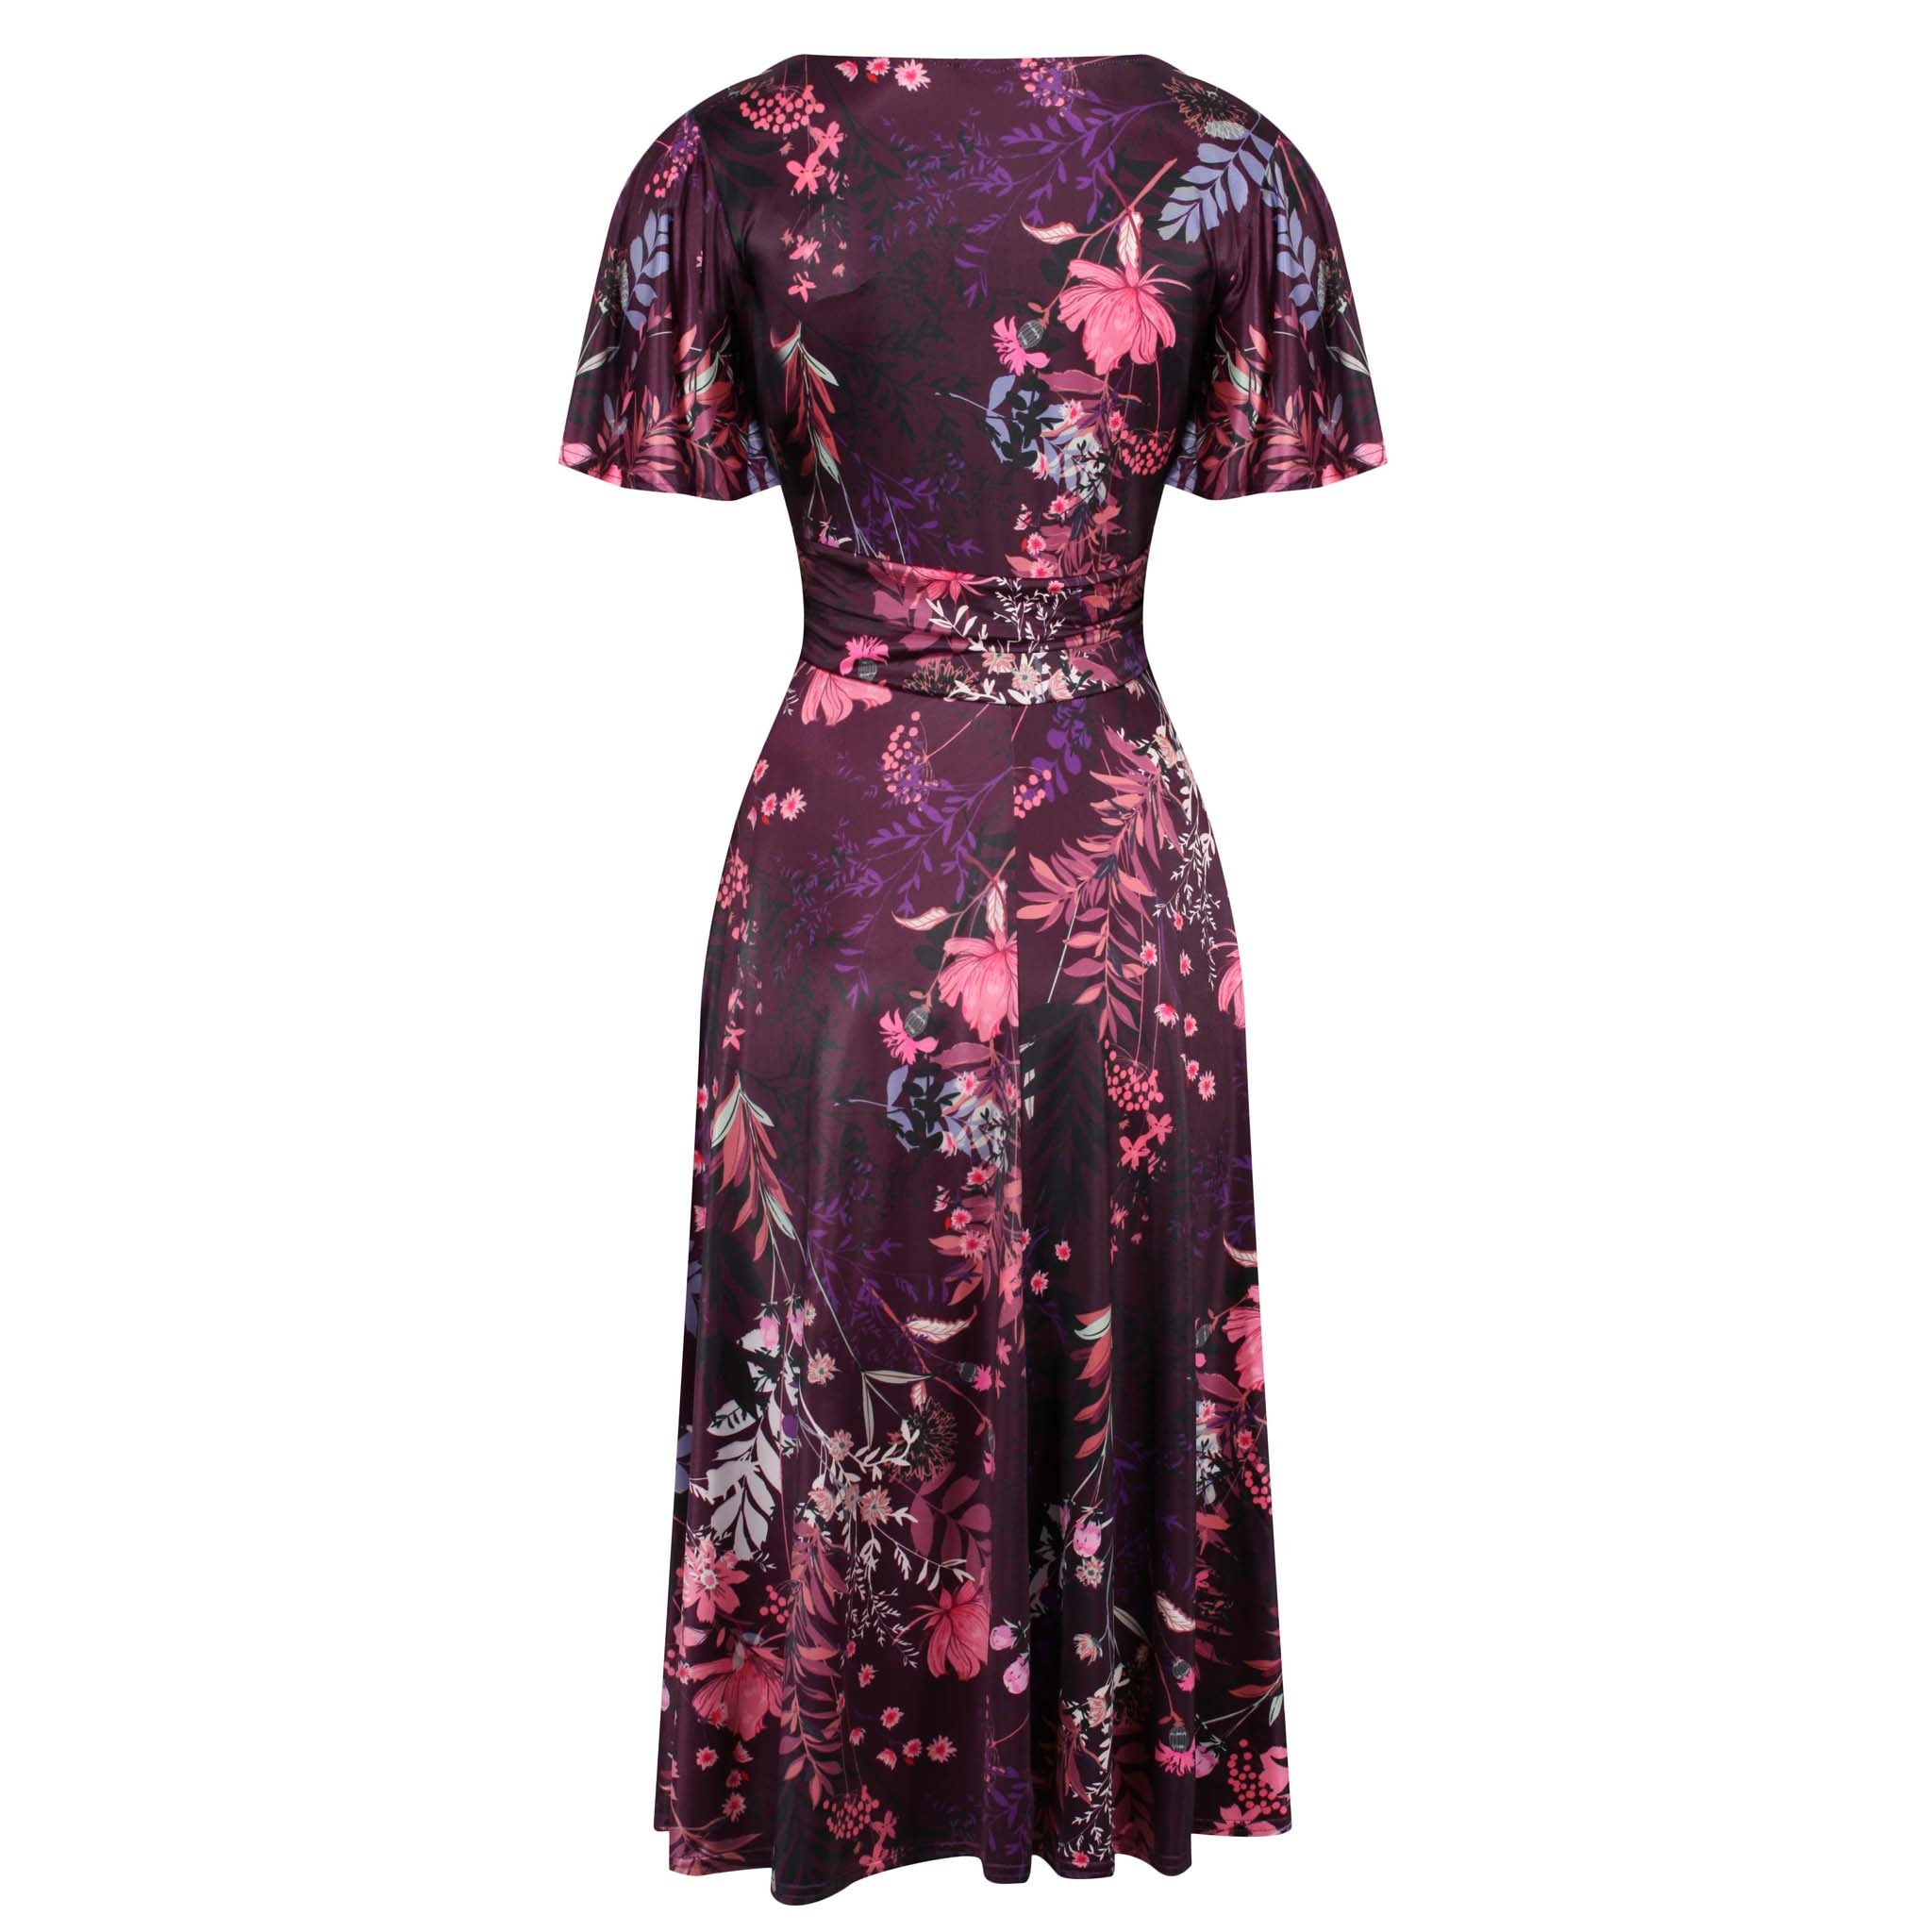 Plum Floral Print Cap Sleeve Crossover Top Vintage Swing Dress